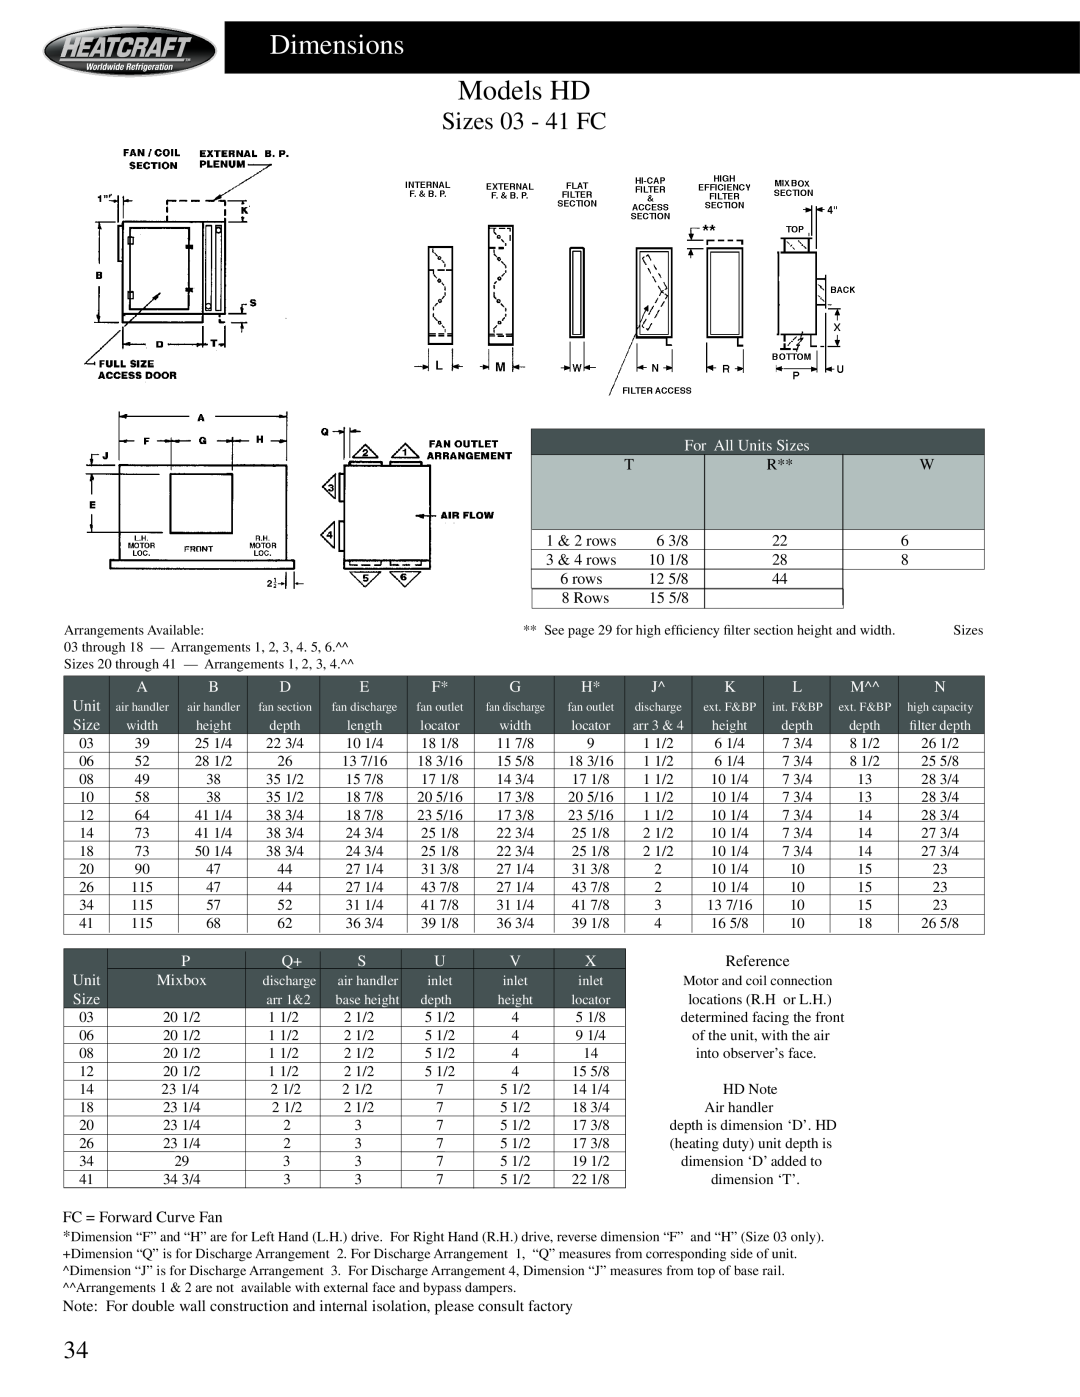 Heatcraft Refrigeration Products HCS manual Models HD, Dimensions, Sizes 03 - 41 FC 